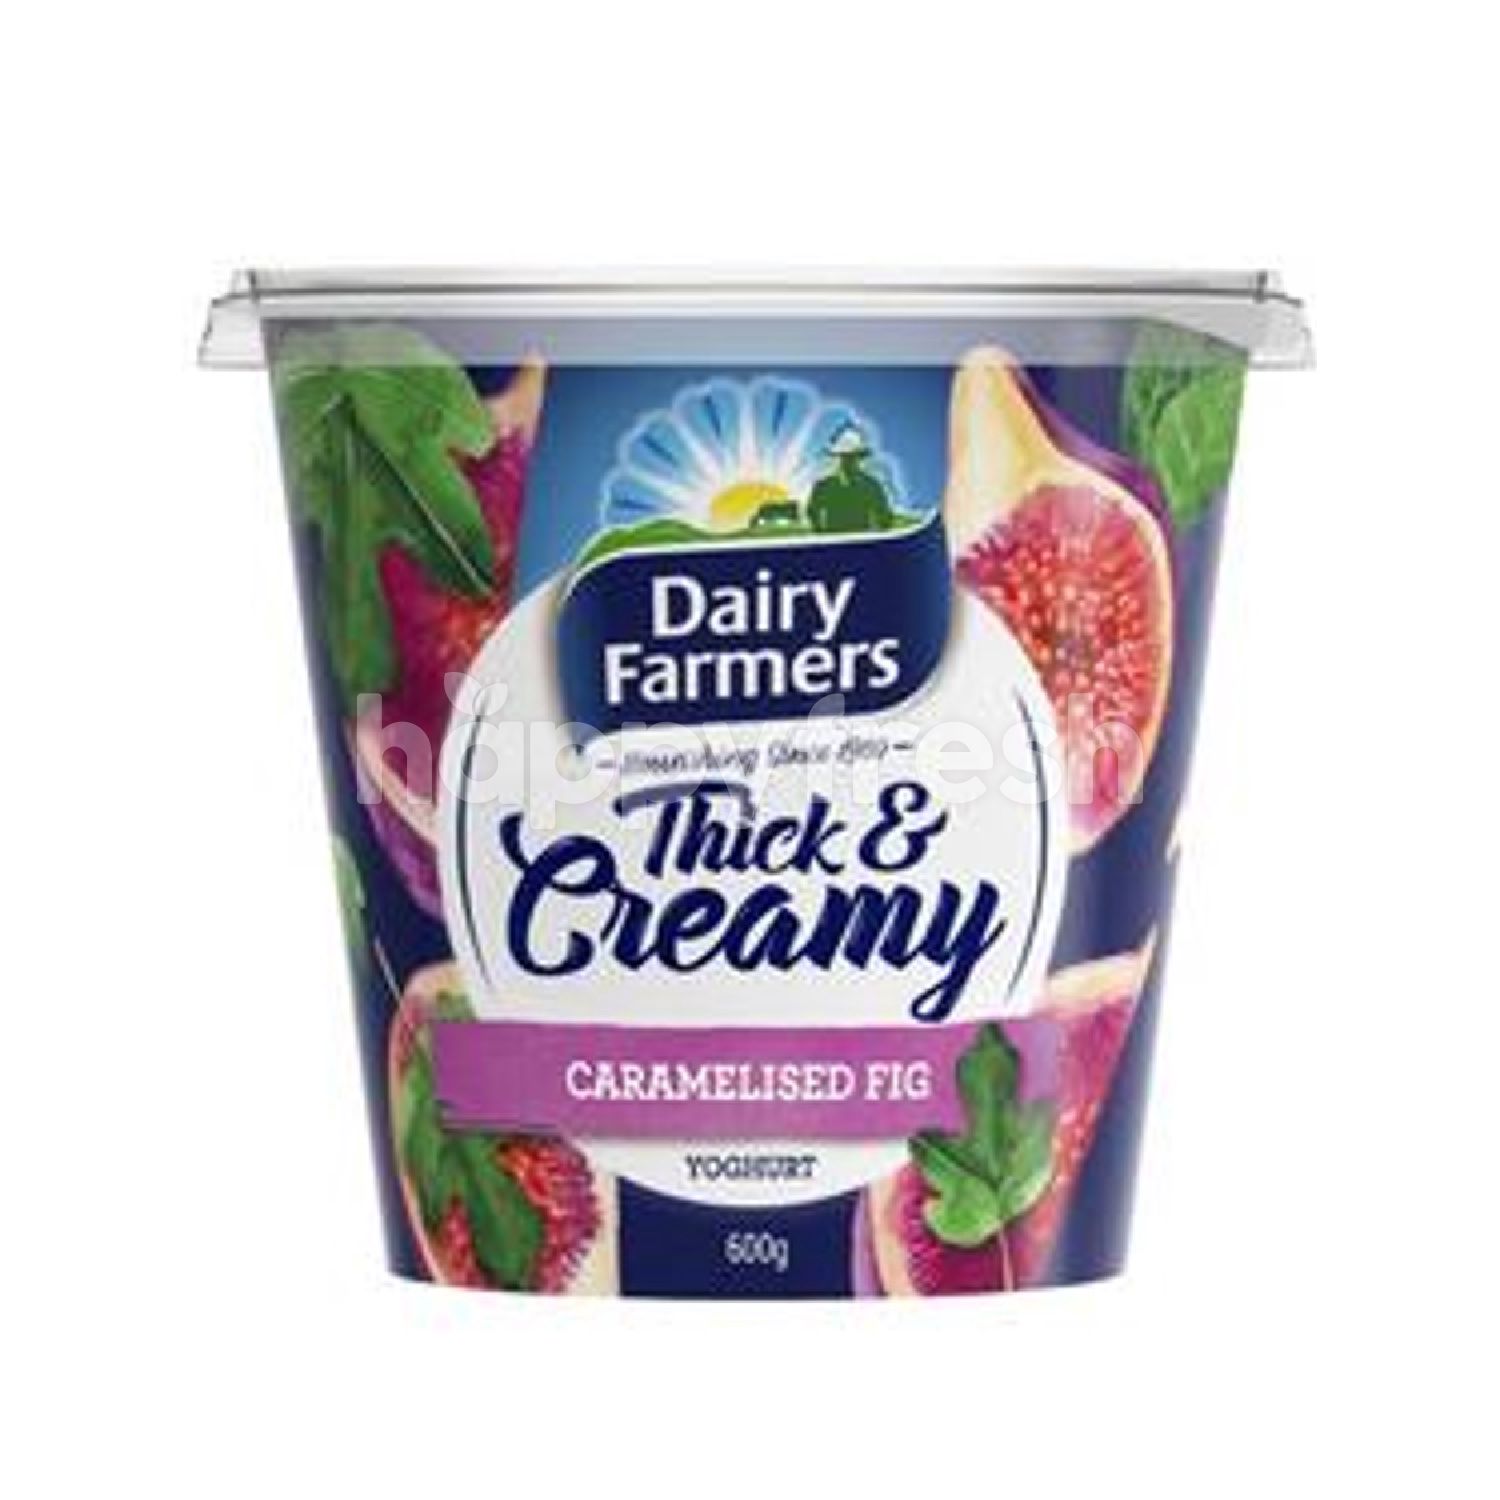 Beli Dairy Farmers Thick & Creamy Caramelised Fig Yoghurt dari Mercato ...